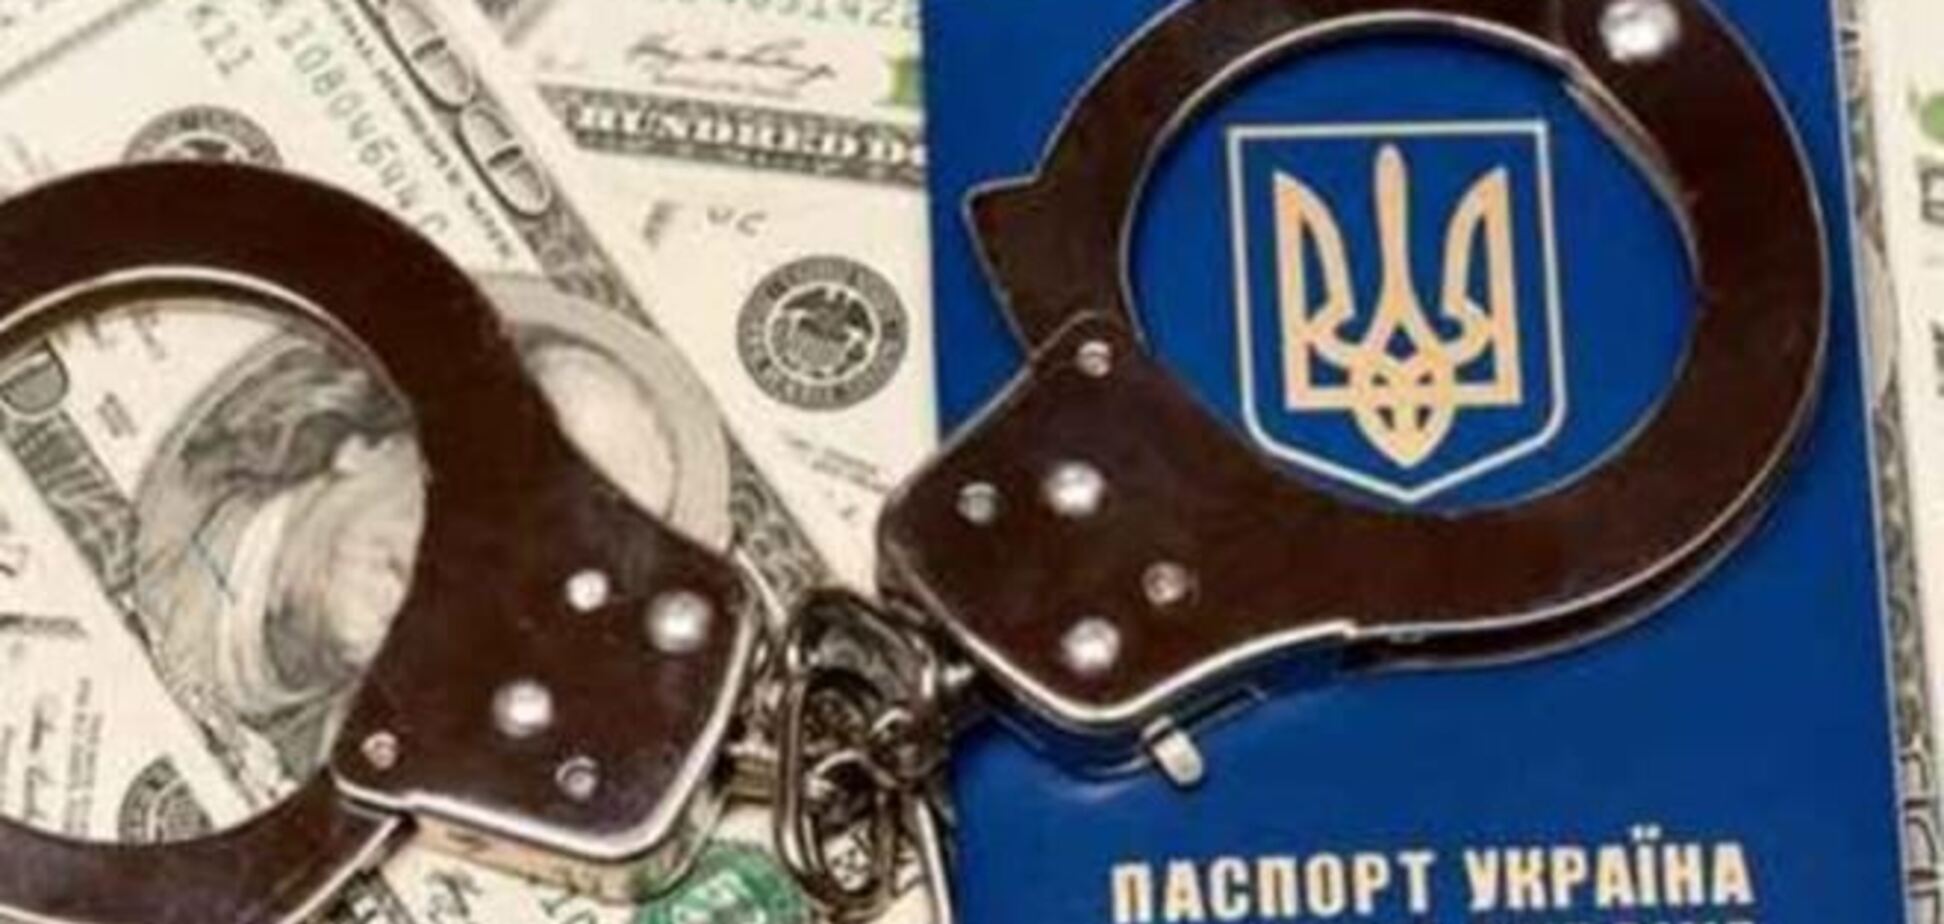 Мошенники контролируют программу Green card для украинцев - США